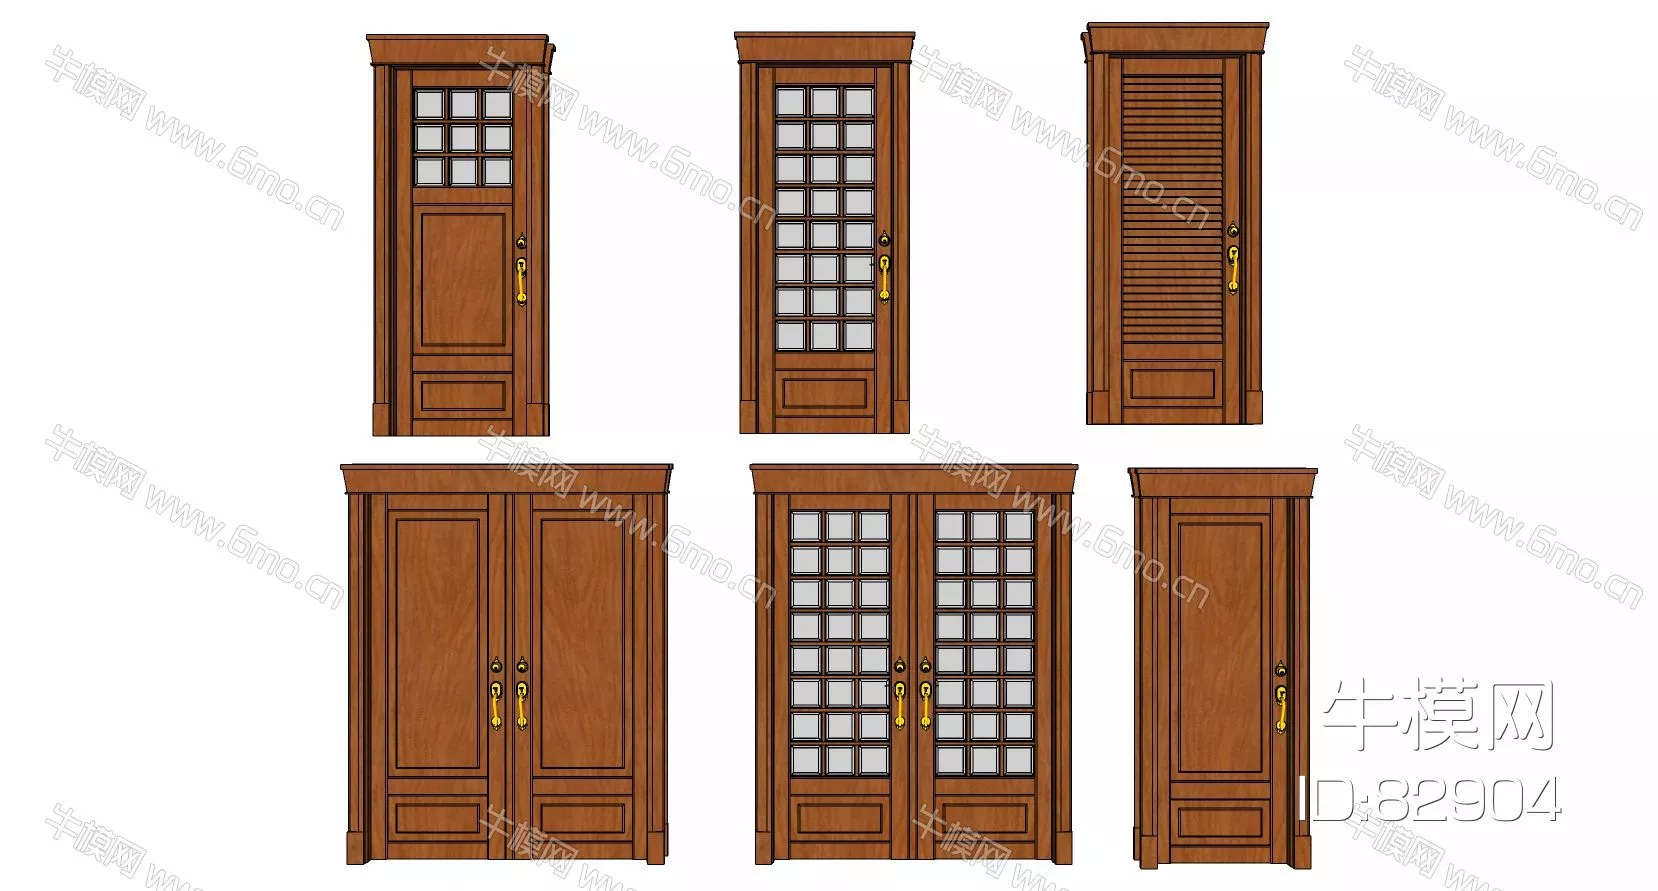 MODERN DOOR AND WINDOWS - SKETCHUP 3D MODEL - ENSCAPE - 82904